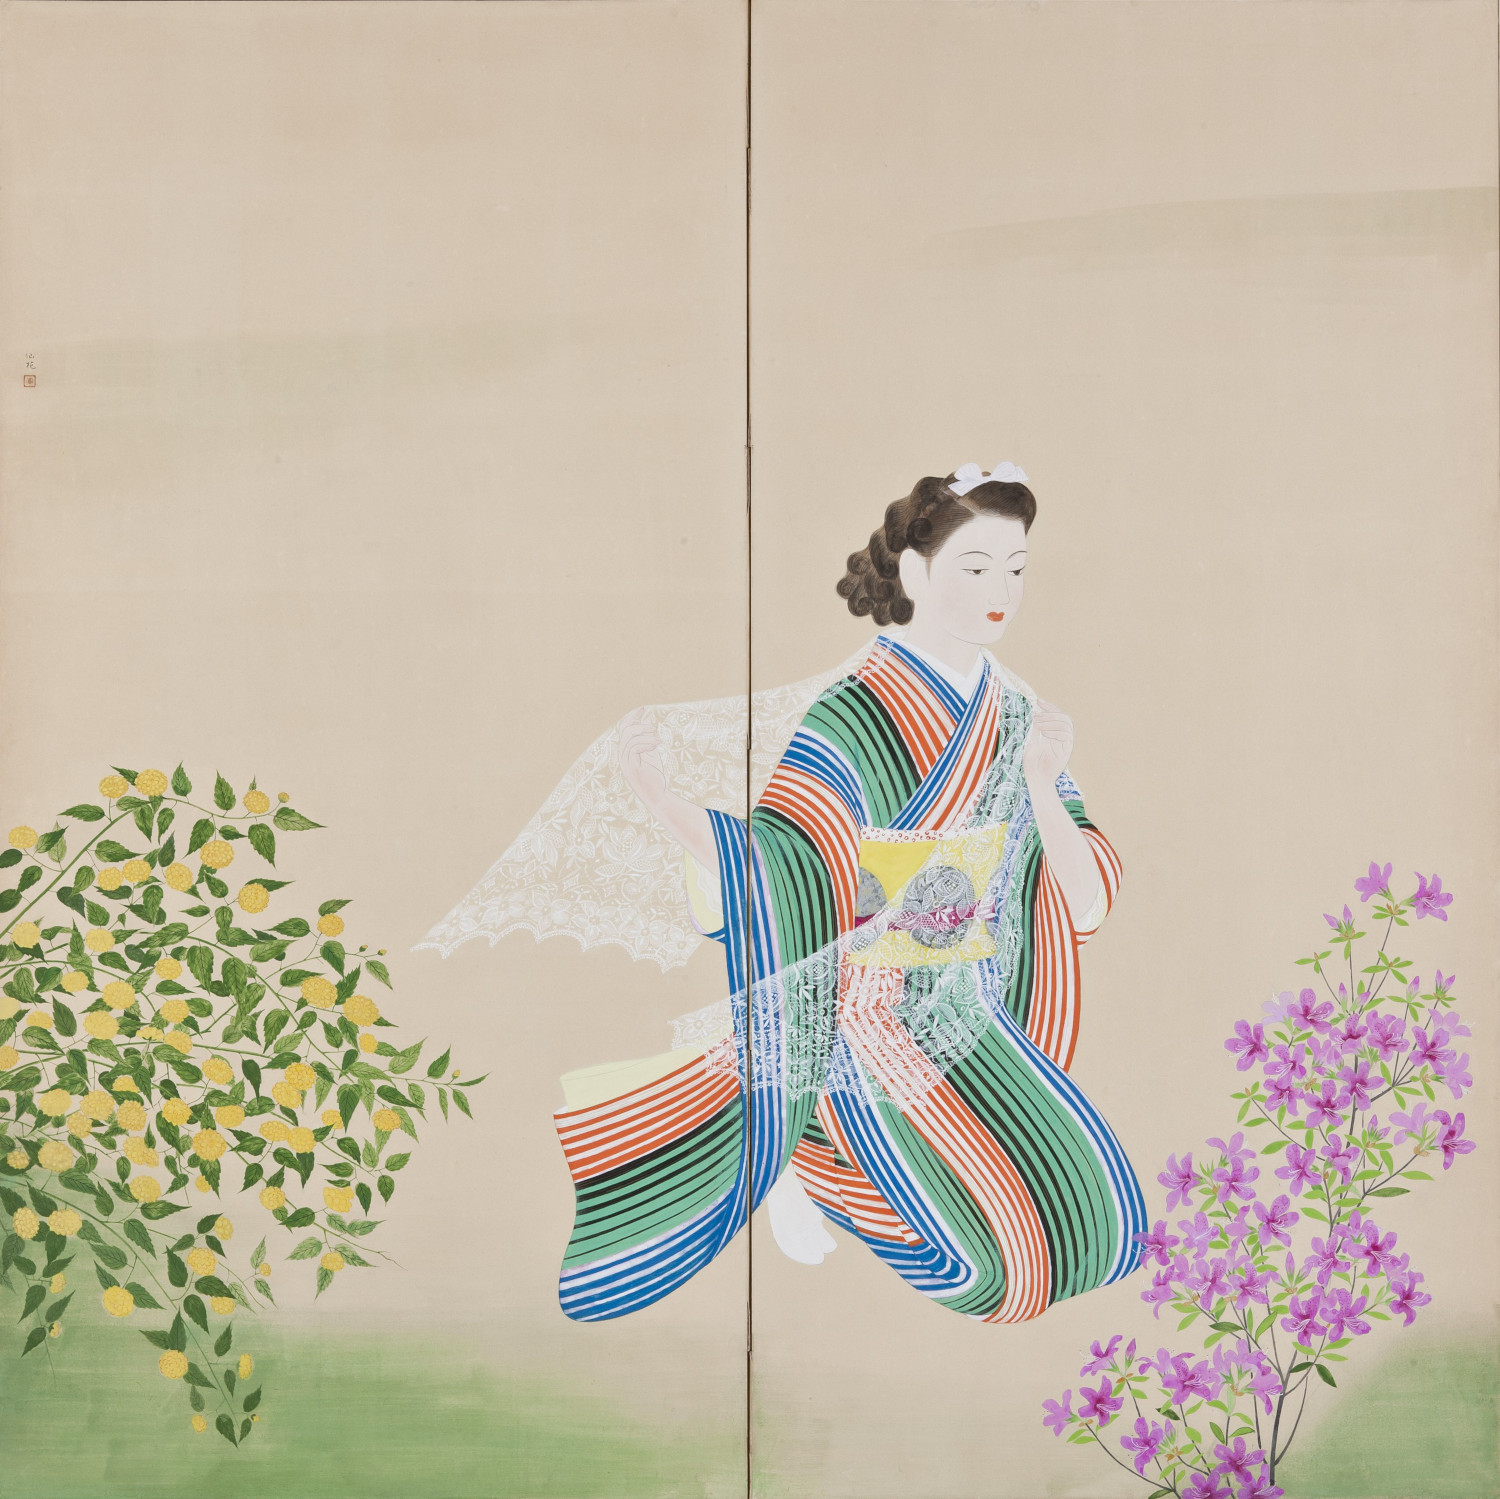 Fumie Taniguchi — AWARE Women artists / Femmes artistes